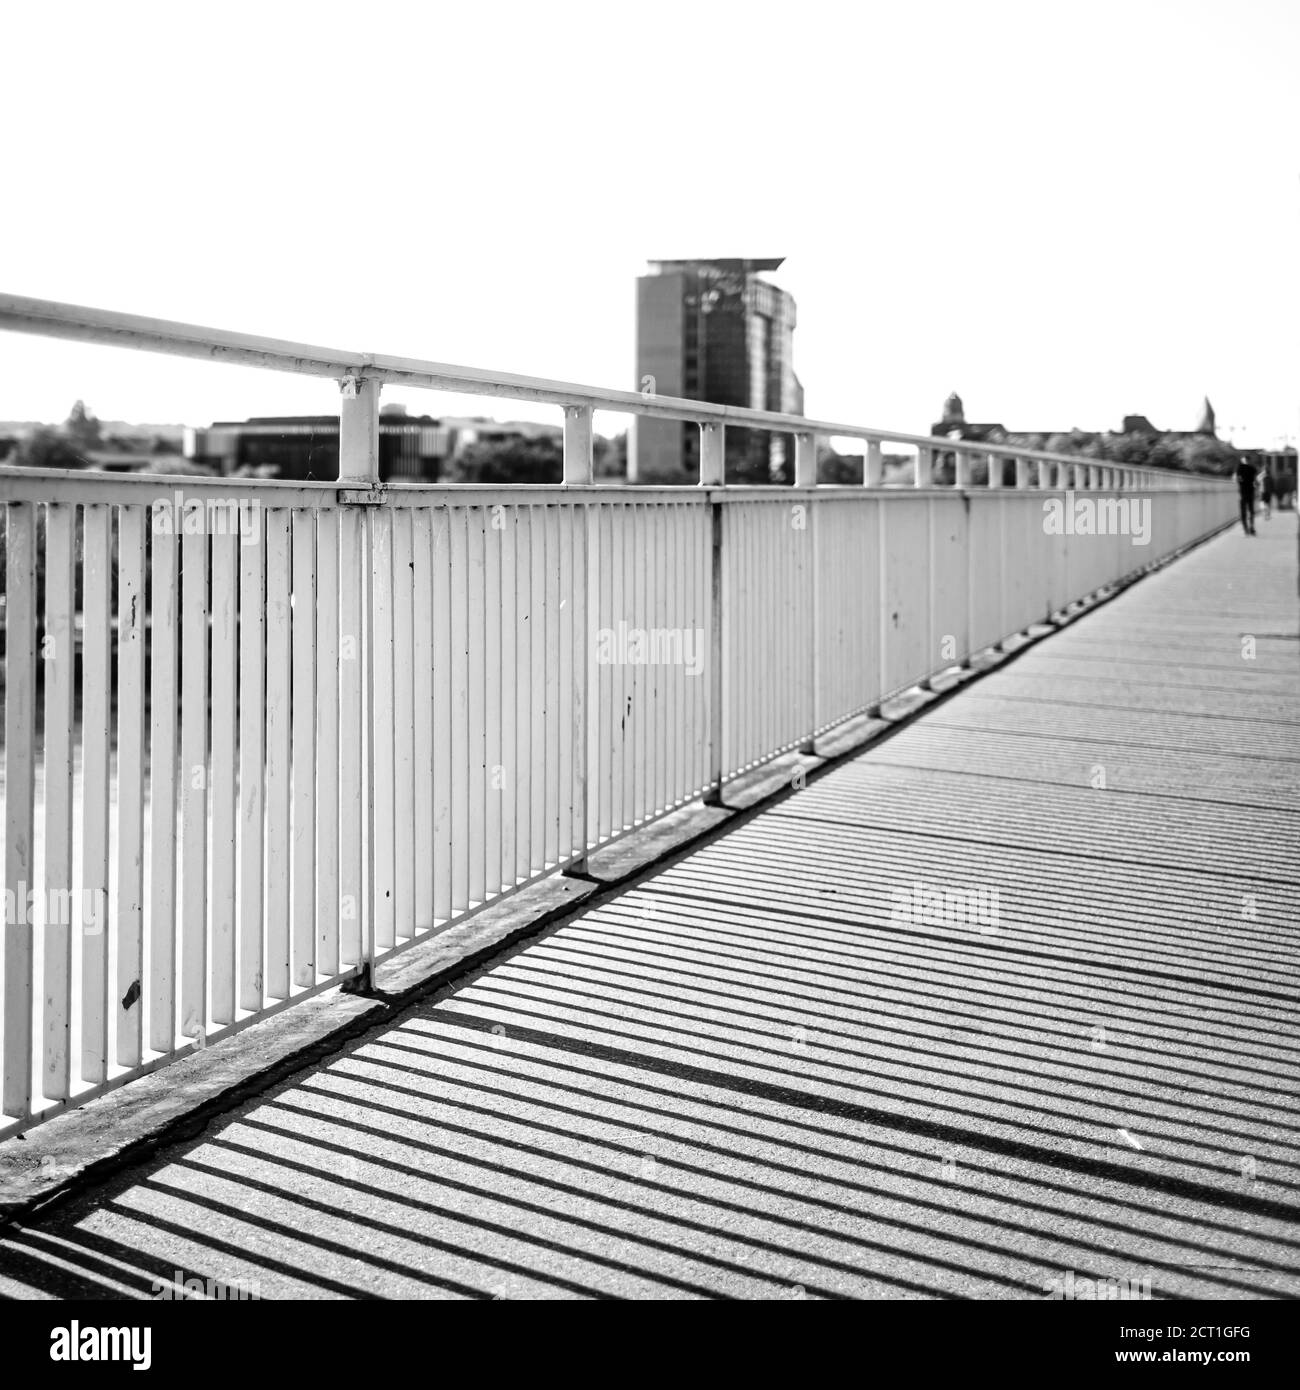 Pedestrians walking on bridge, blurred motion Stock Photo